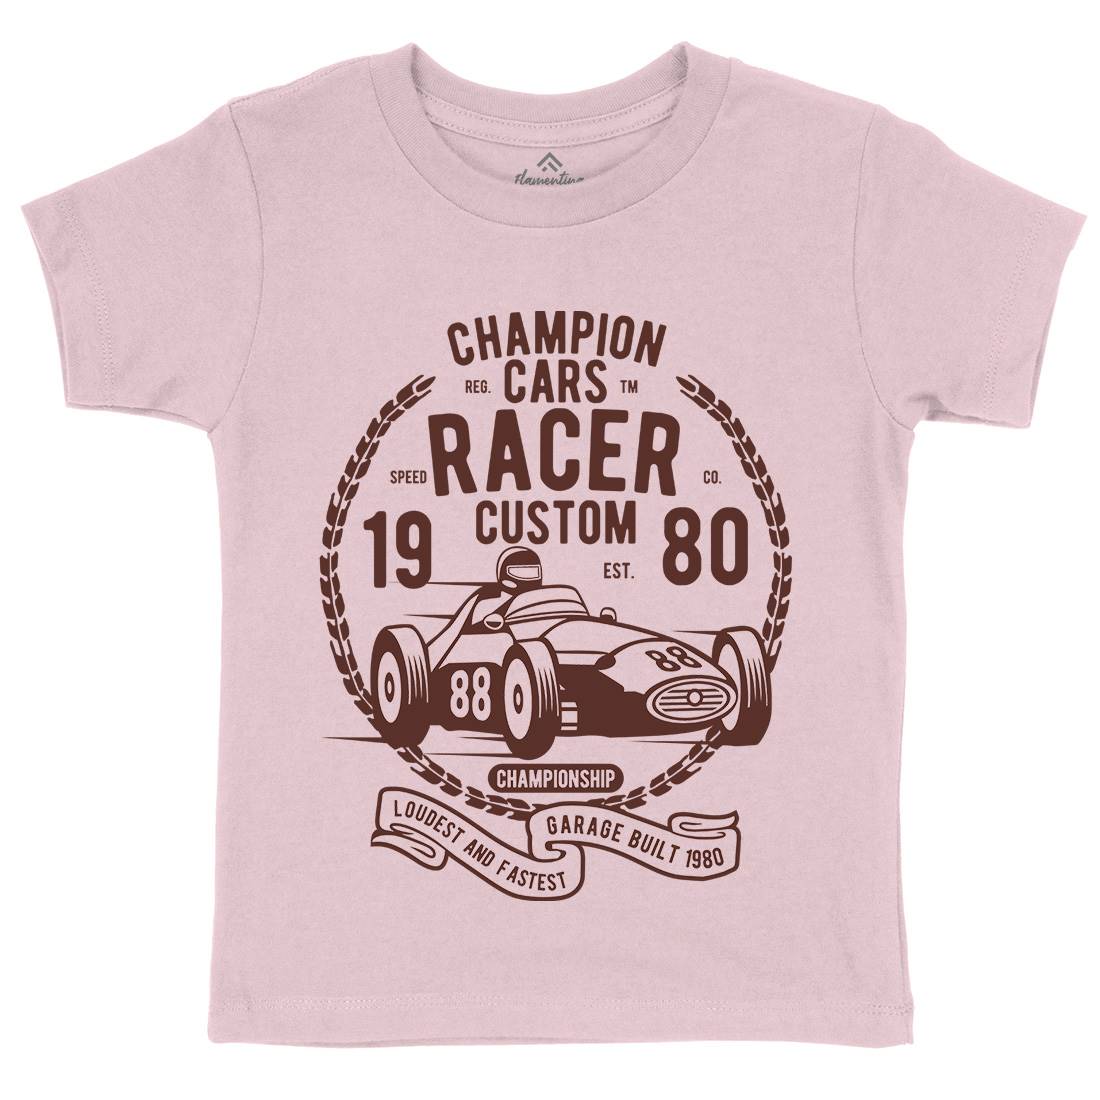 Champion Cars Racer Kids Crew Neck T-Shirt Cars B395